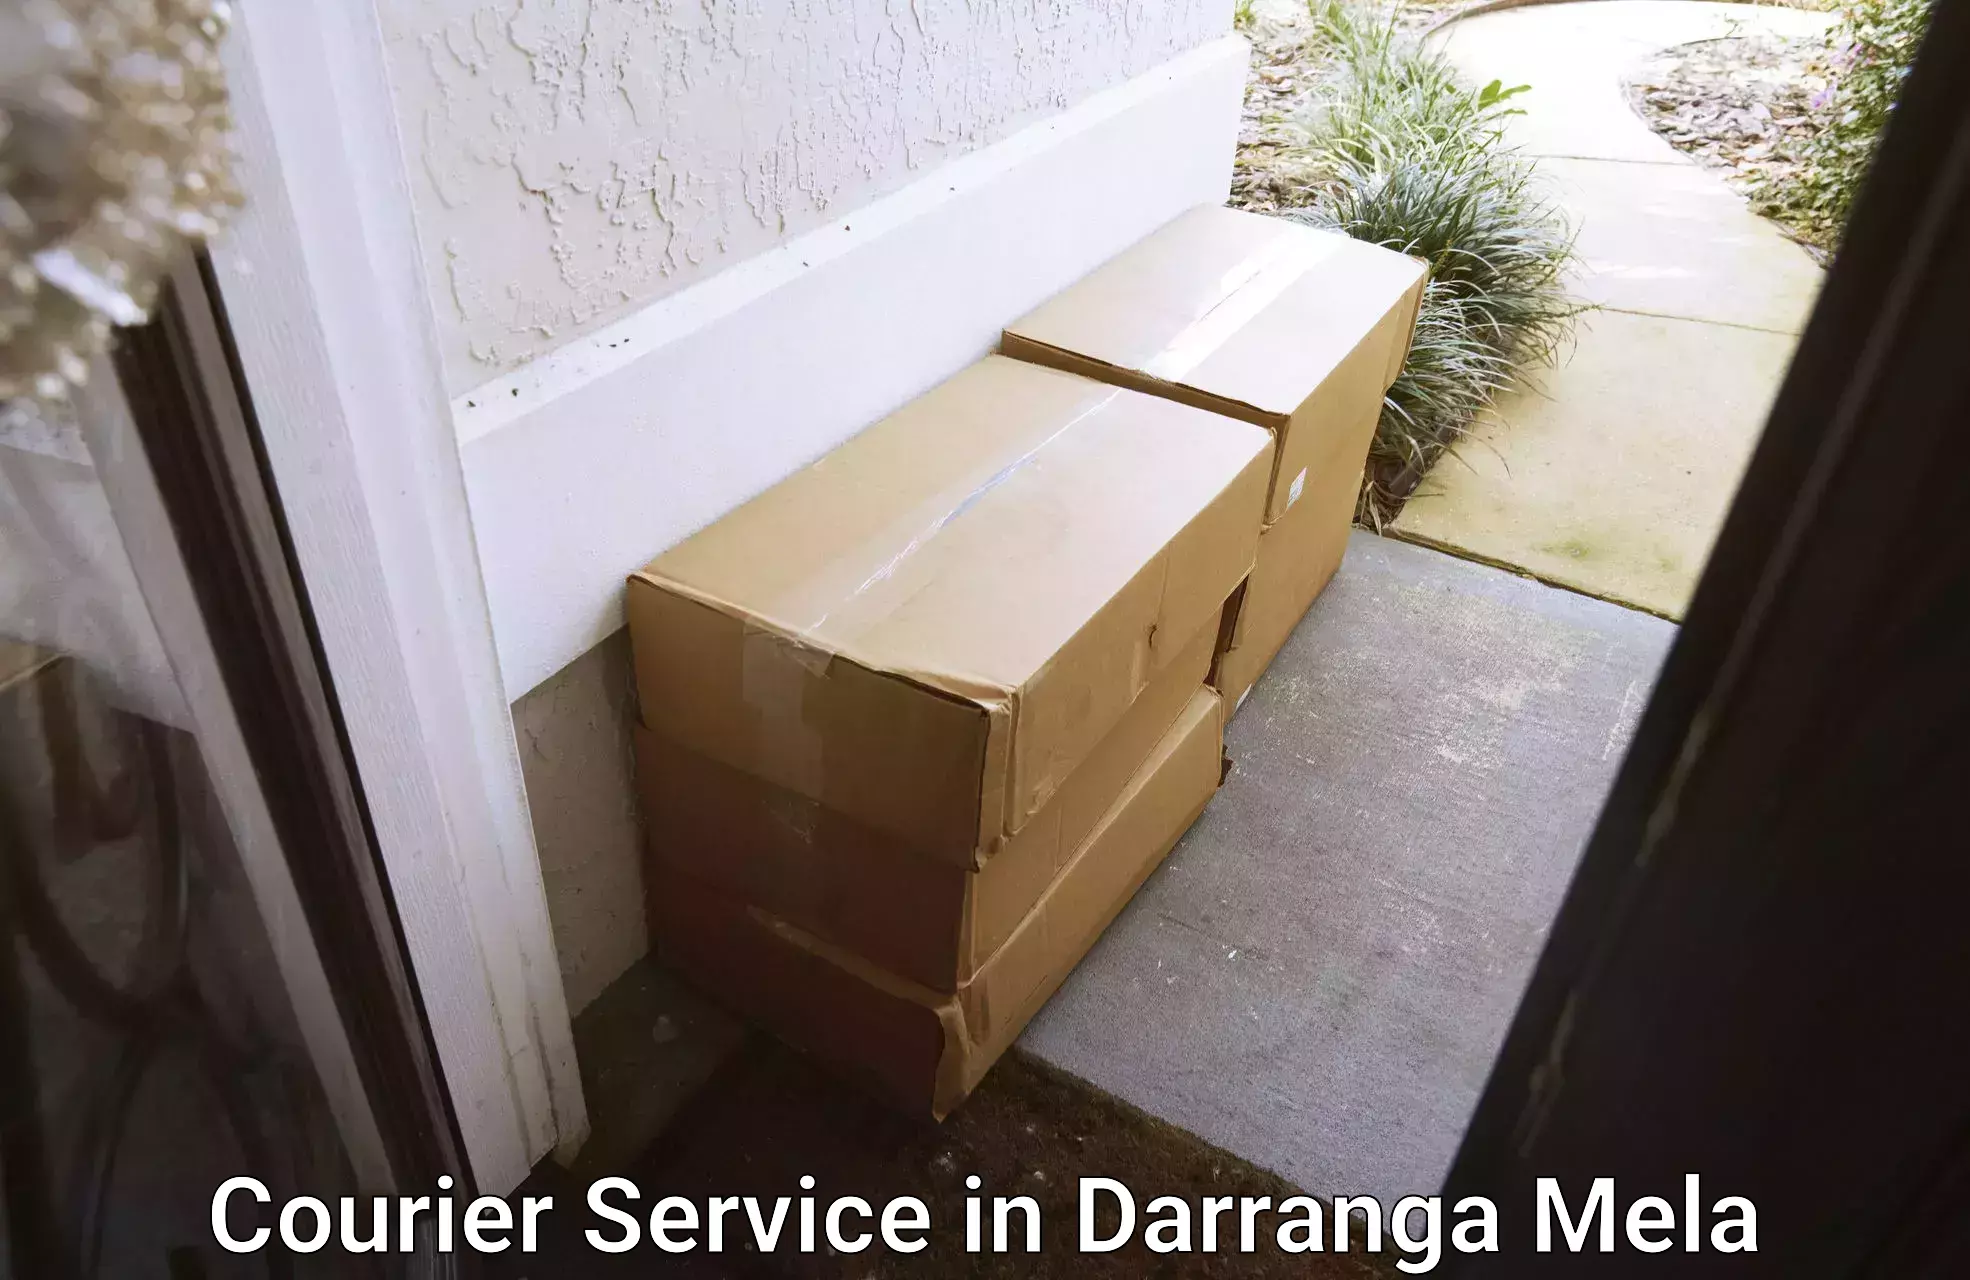 Small parcel delivery in Darranga Mela